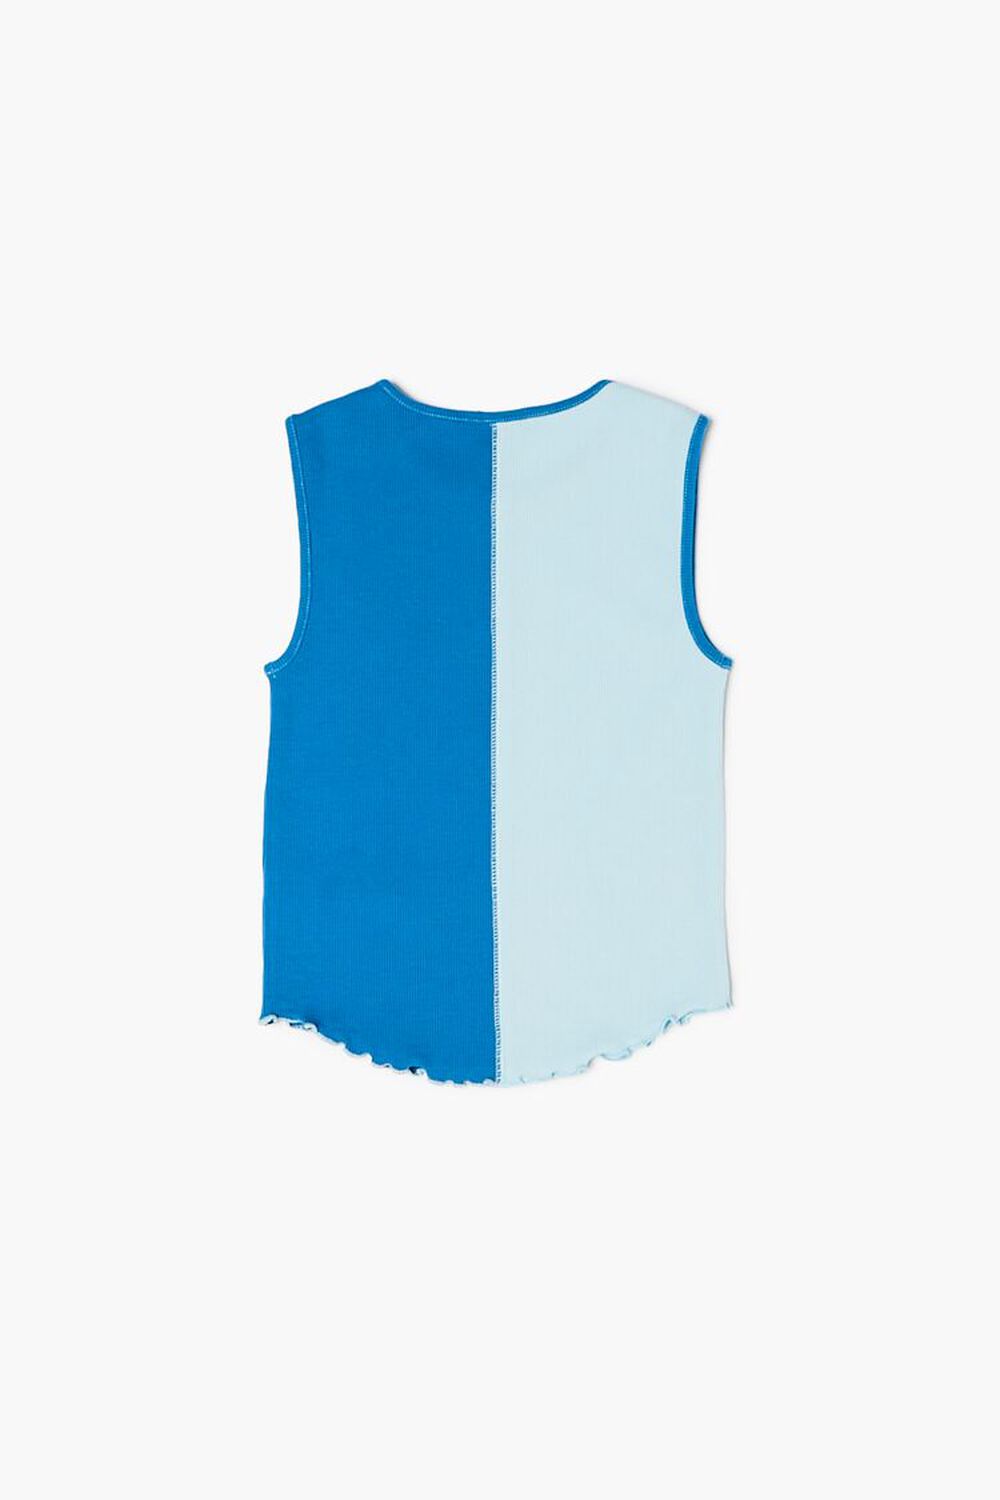 POWDER BLUE/BLUE Girls Colorblock Tank Top (Kids), image 2